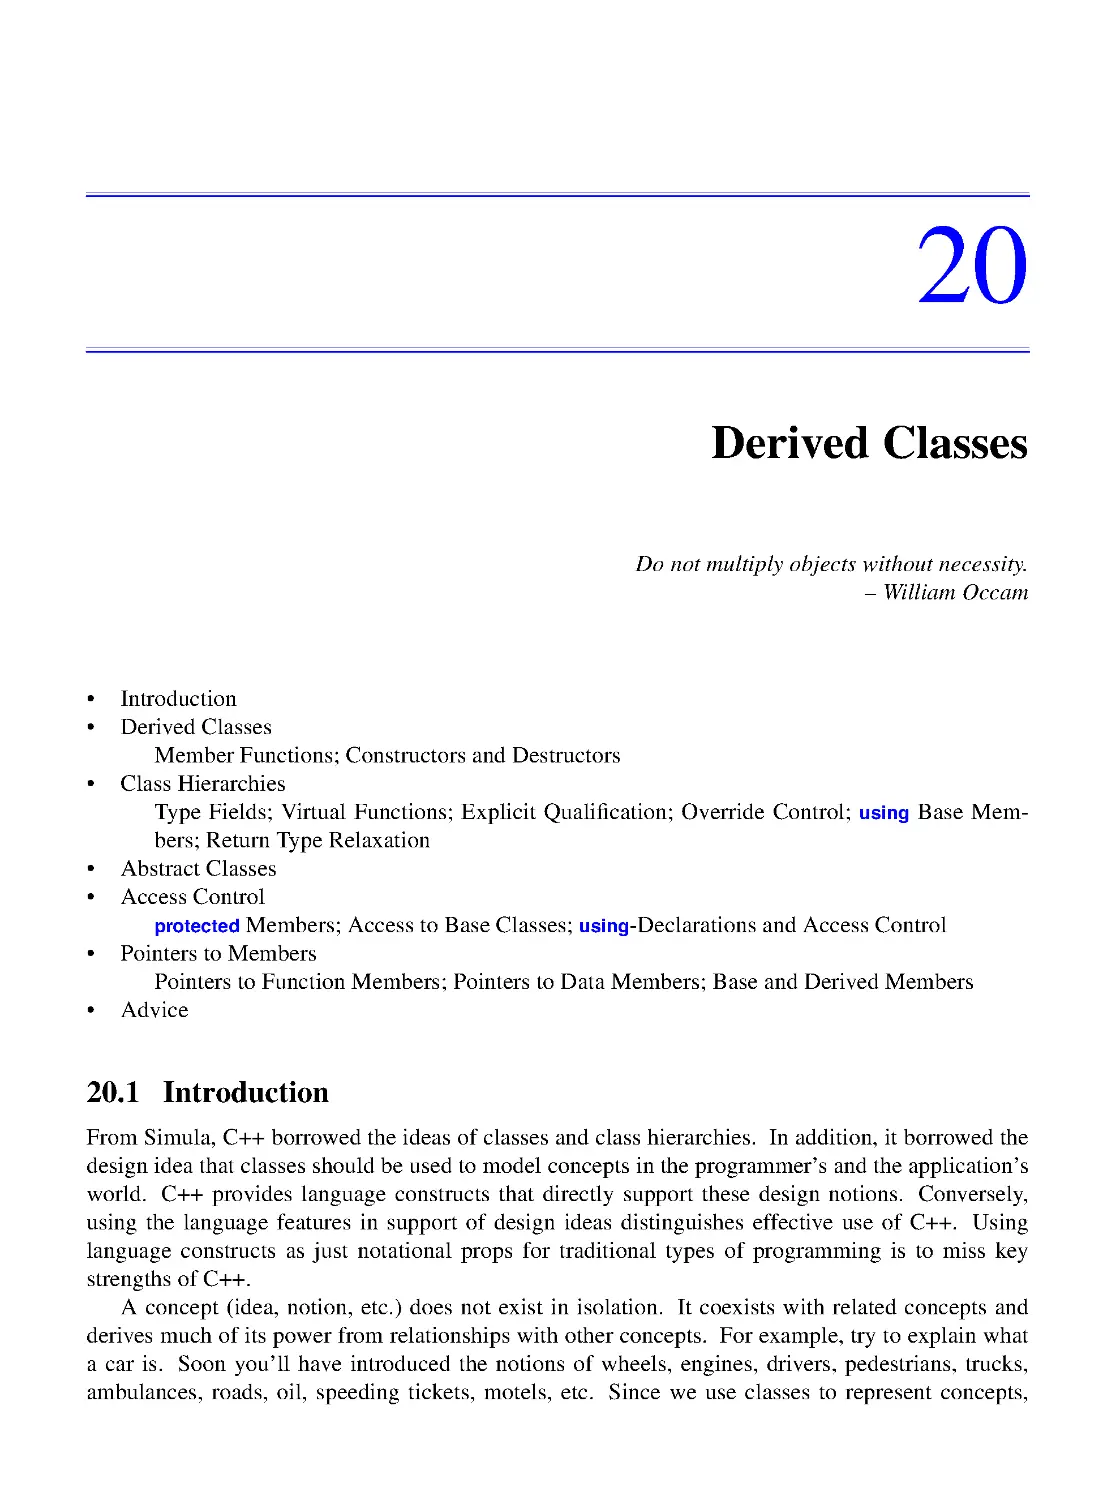 20. Derived Classes